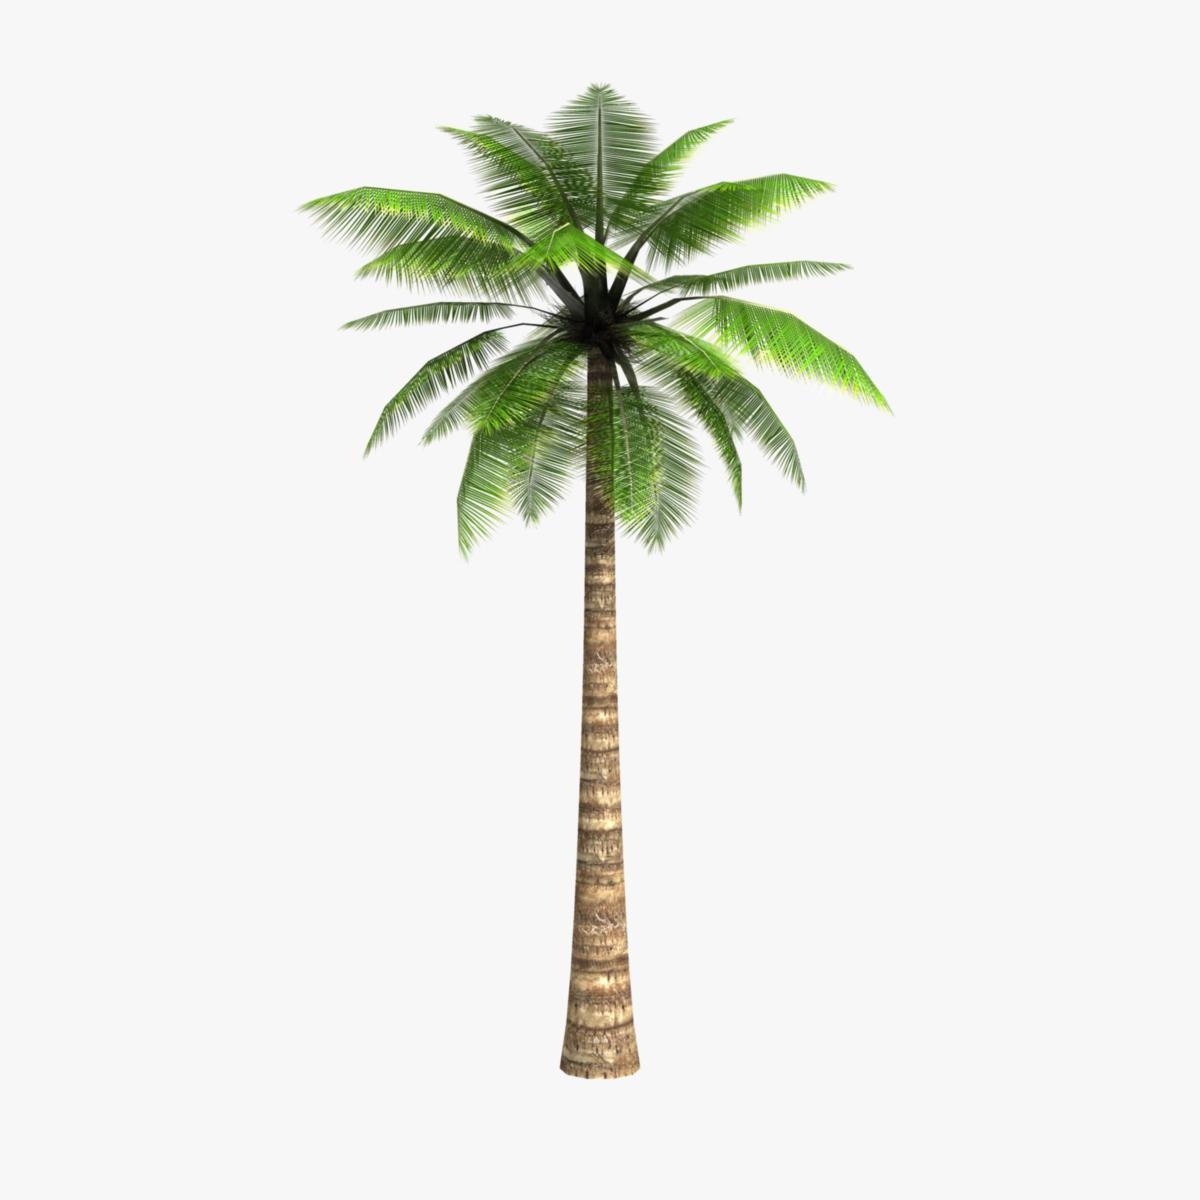 3d model of lowpoly palm tree